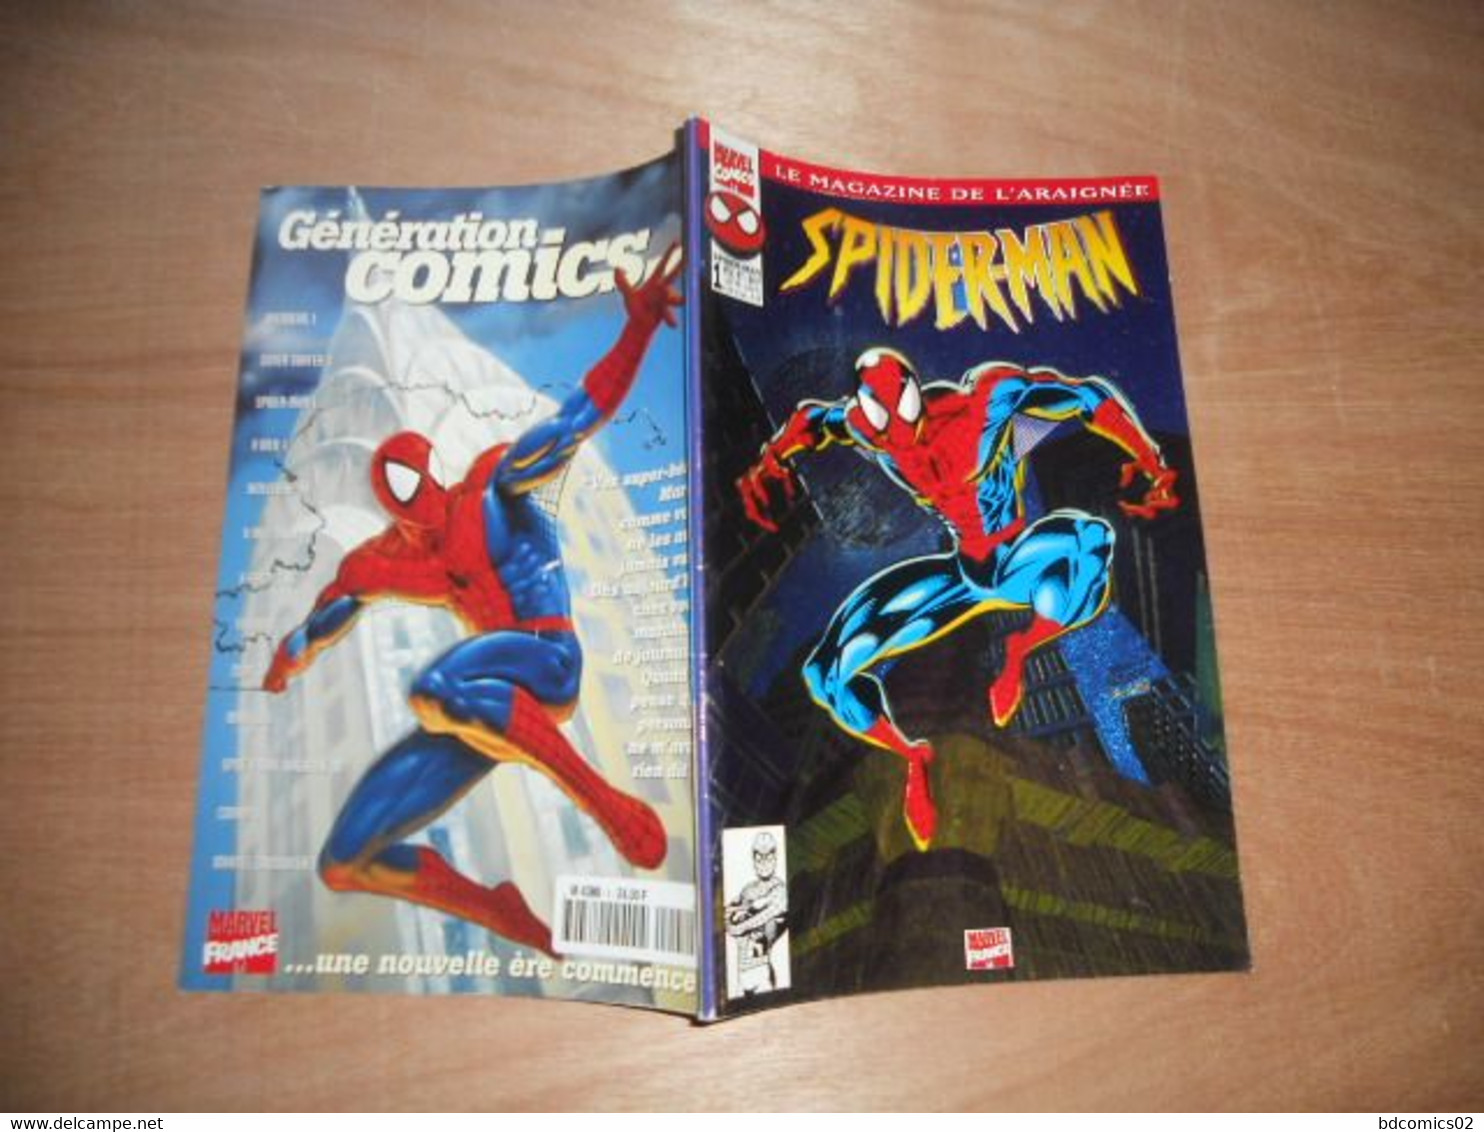 Spiderman Le Magazine De L'araignee N°1  Premiere Serie 1997 Marvel France - Spider-Man